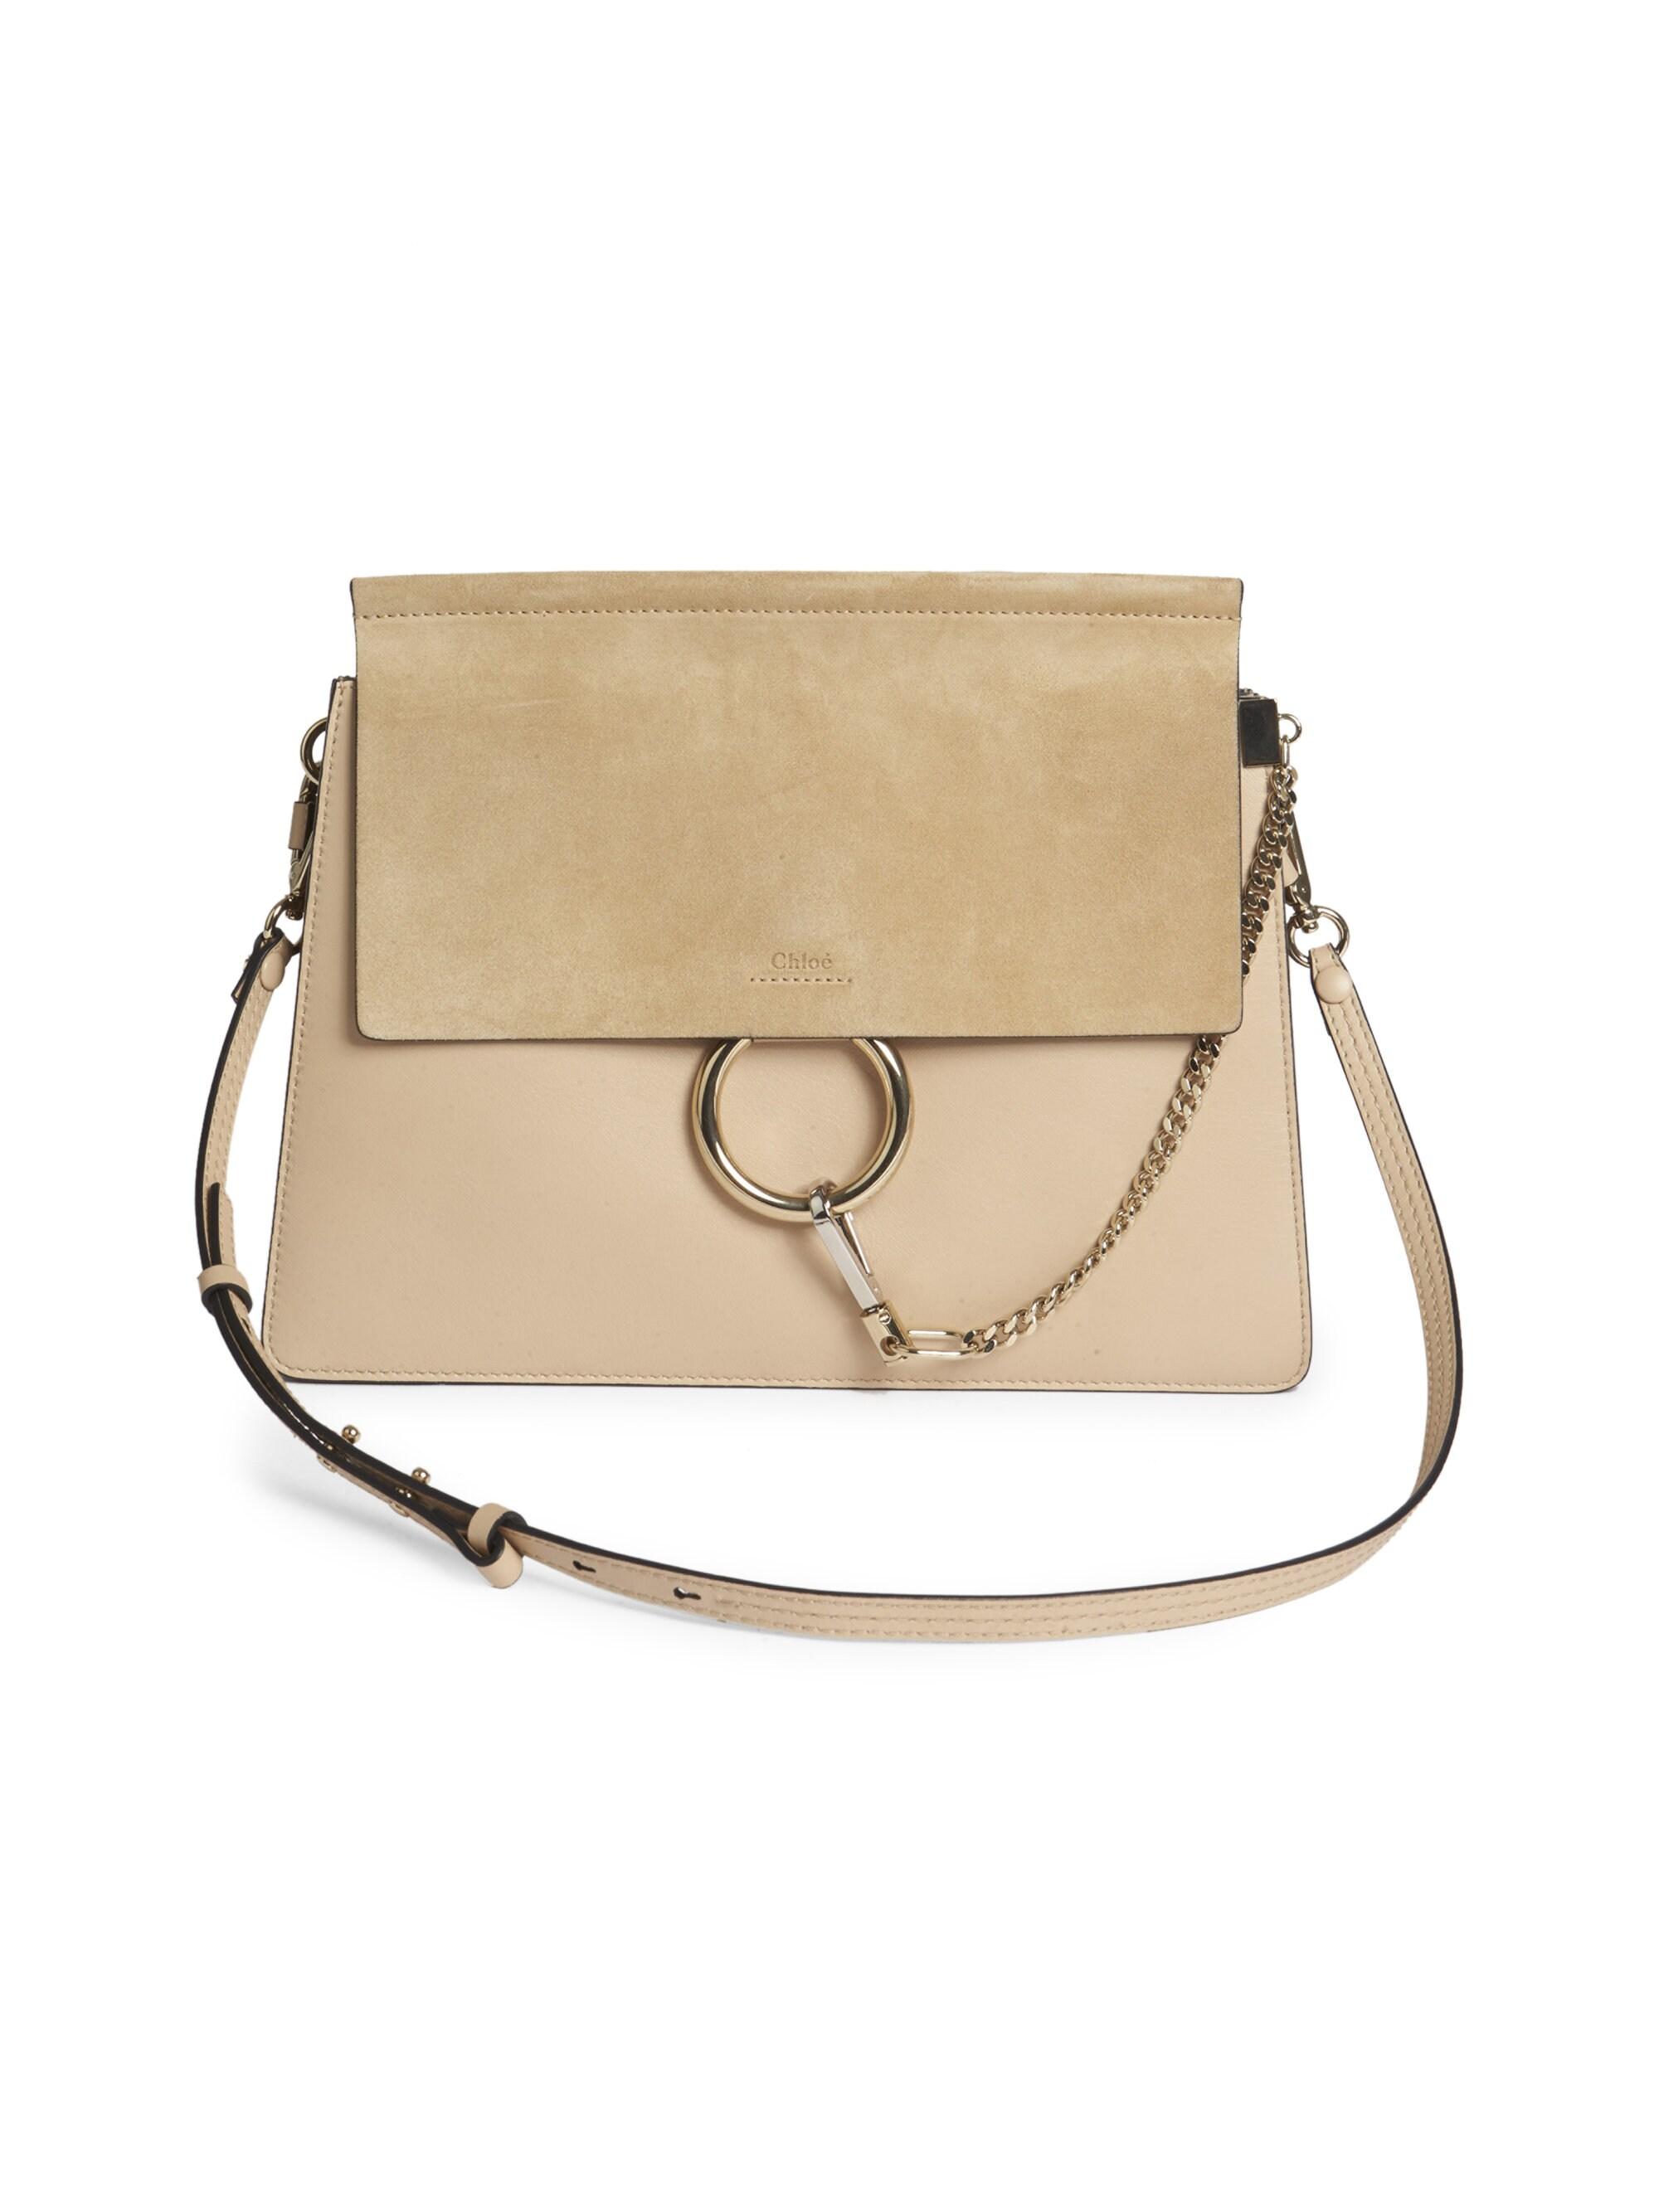 Chloé Medium Faye Leather & Suede Shoulder Bag in Pearl Beige (Natural ...